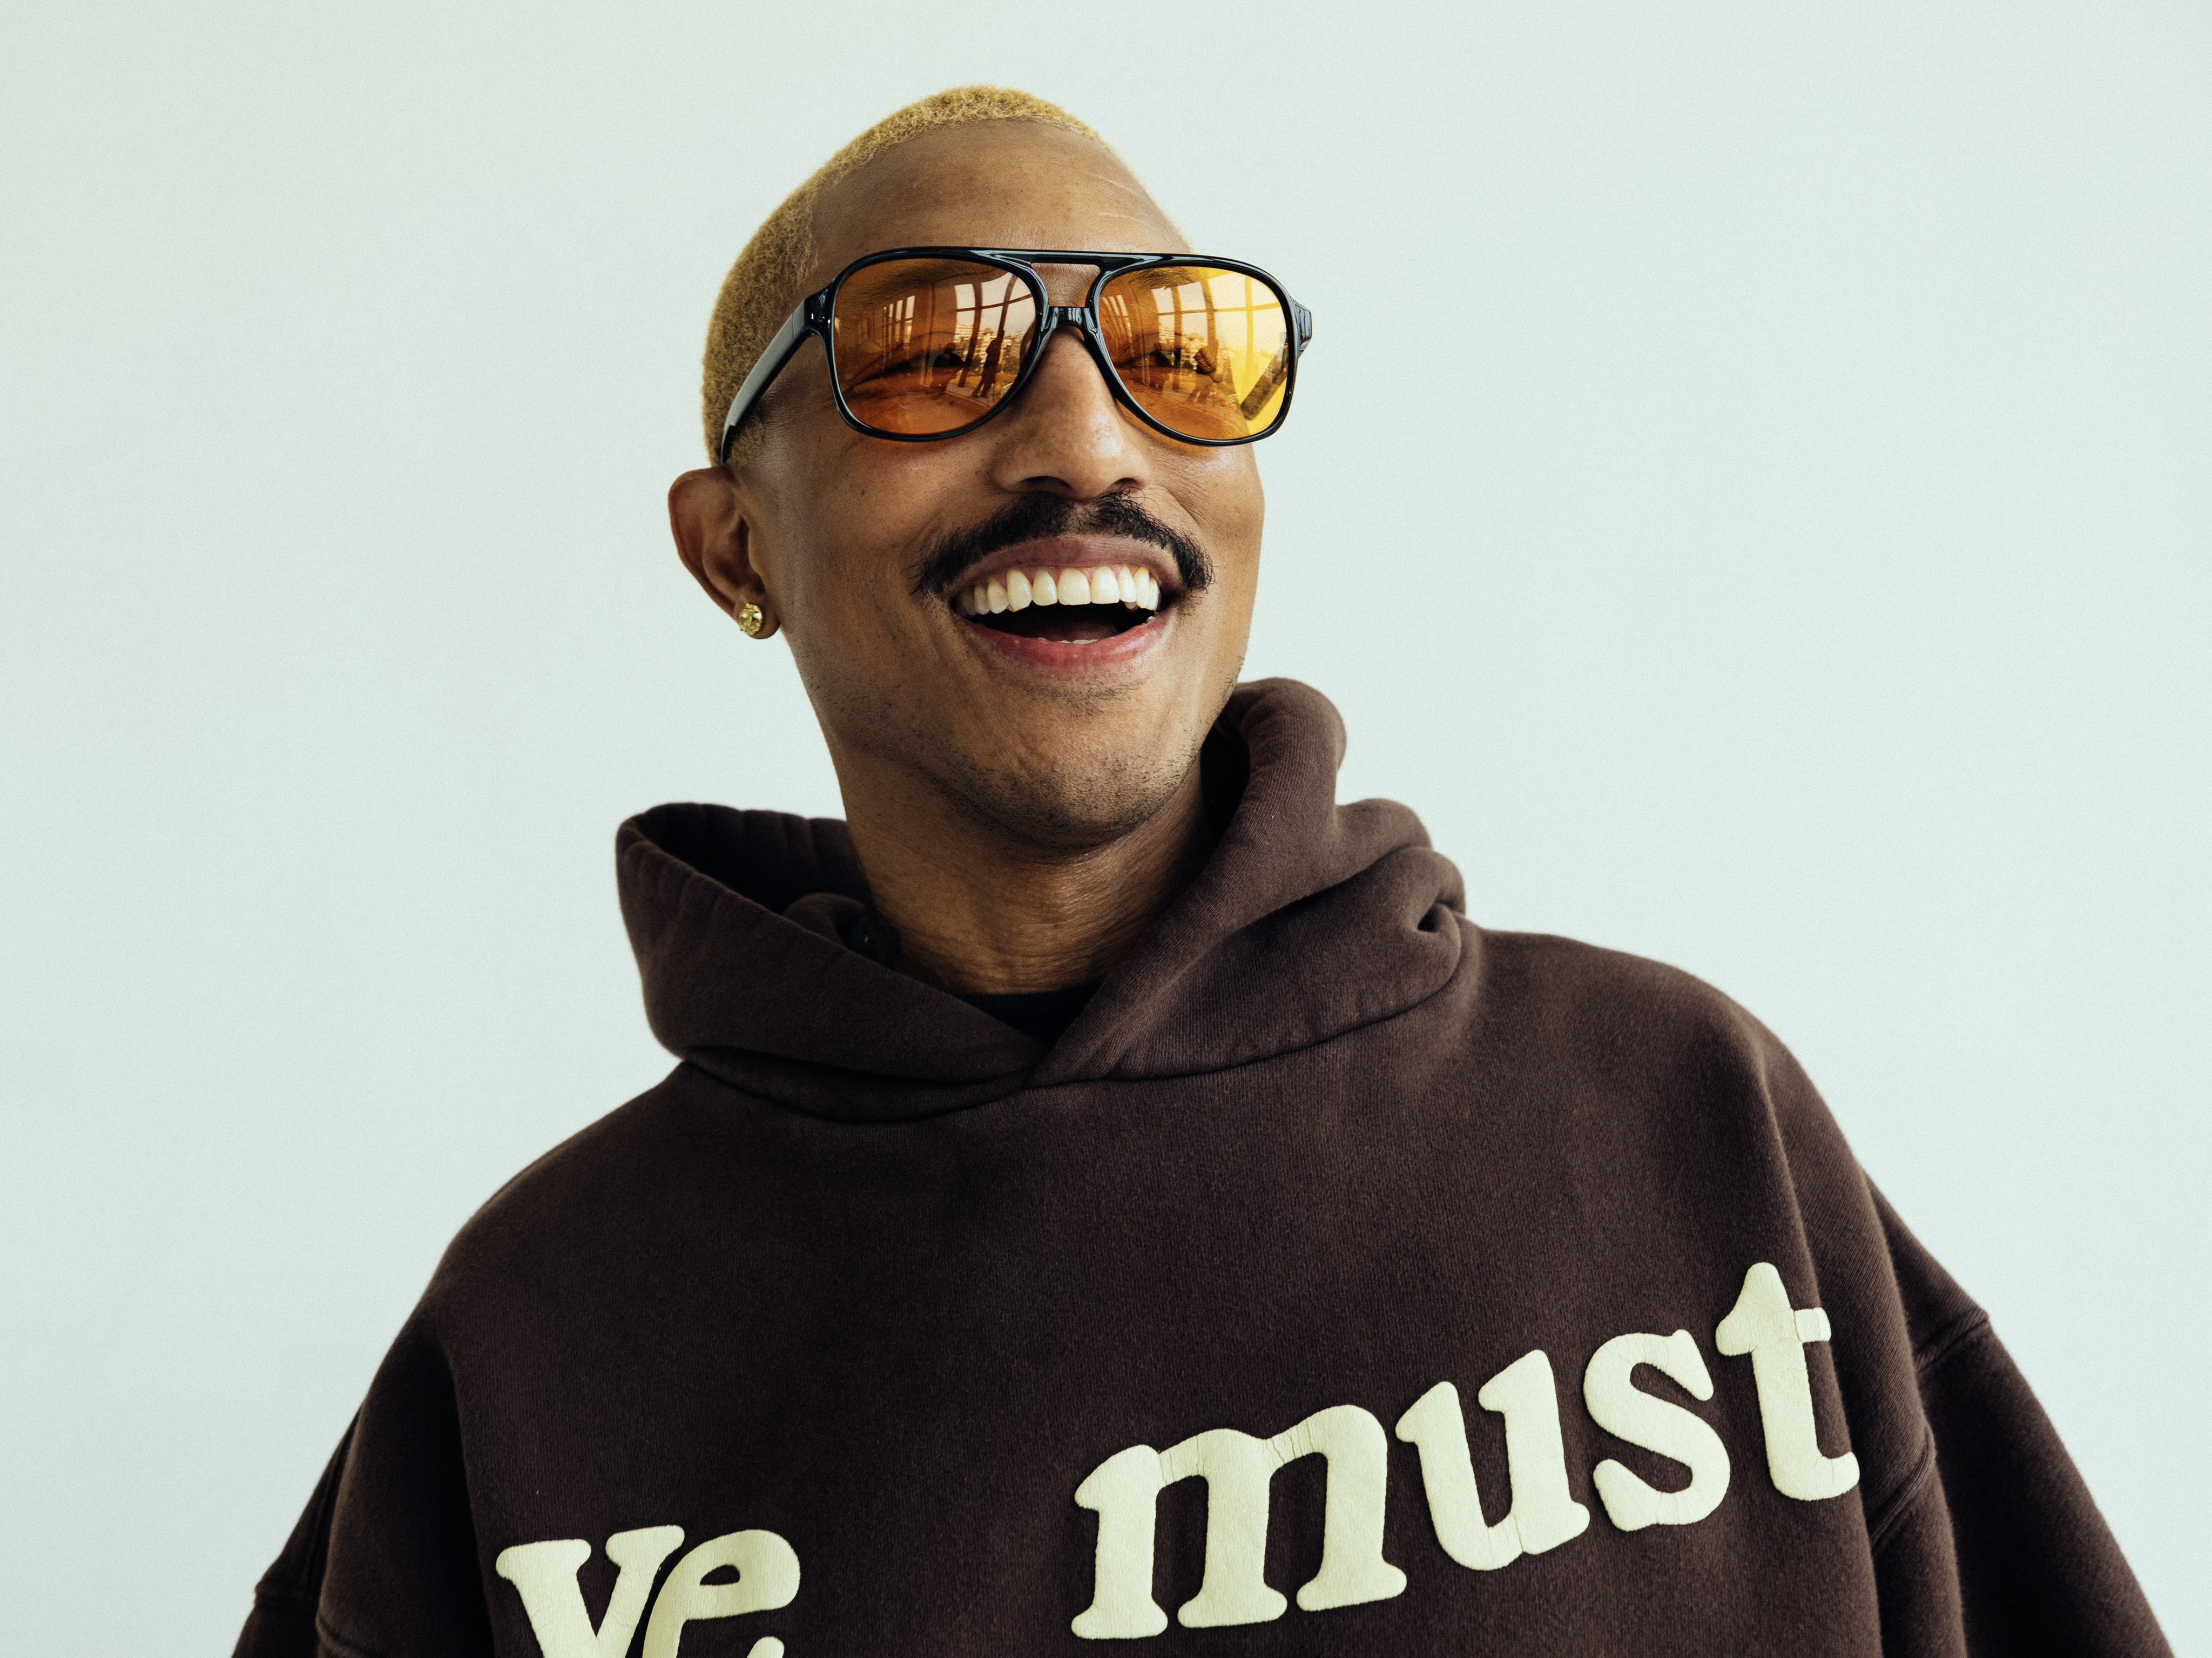 CHANEL Pre-Owned x Pharrell Williams 2019 Logo Round Sunglasses